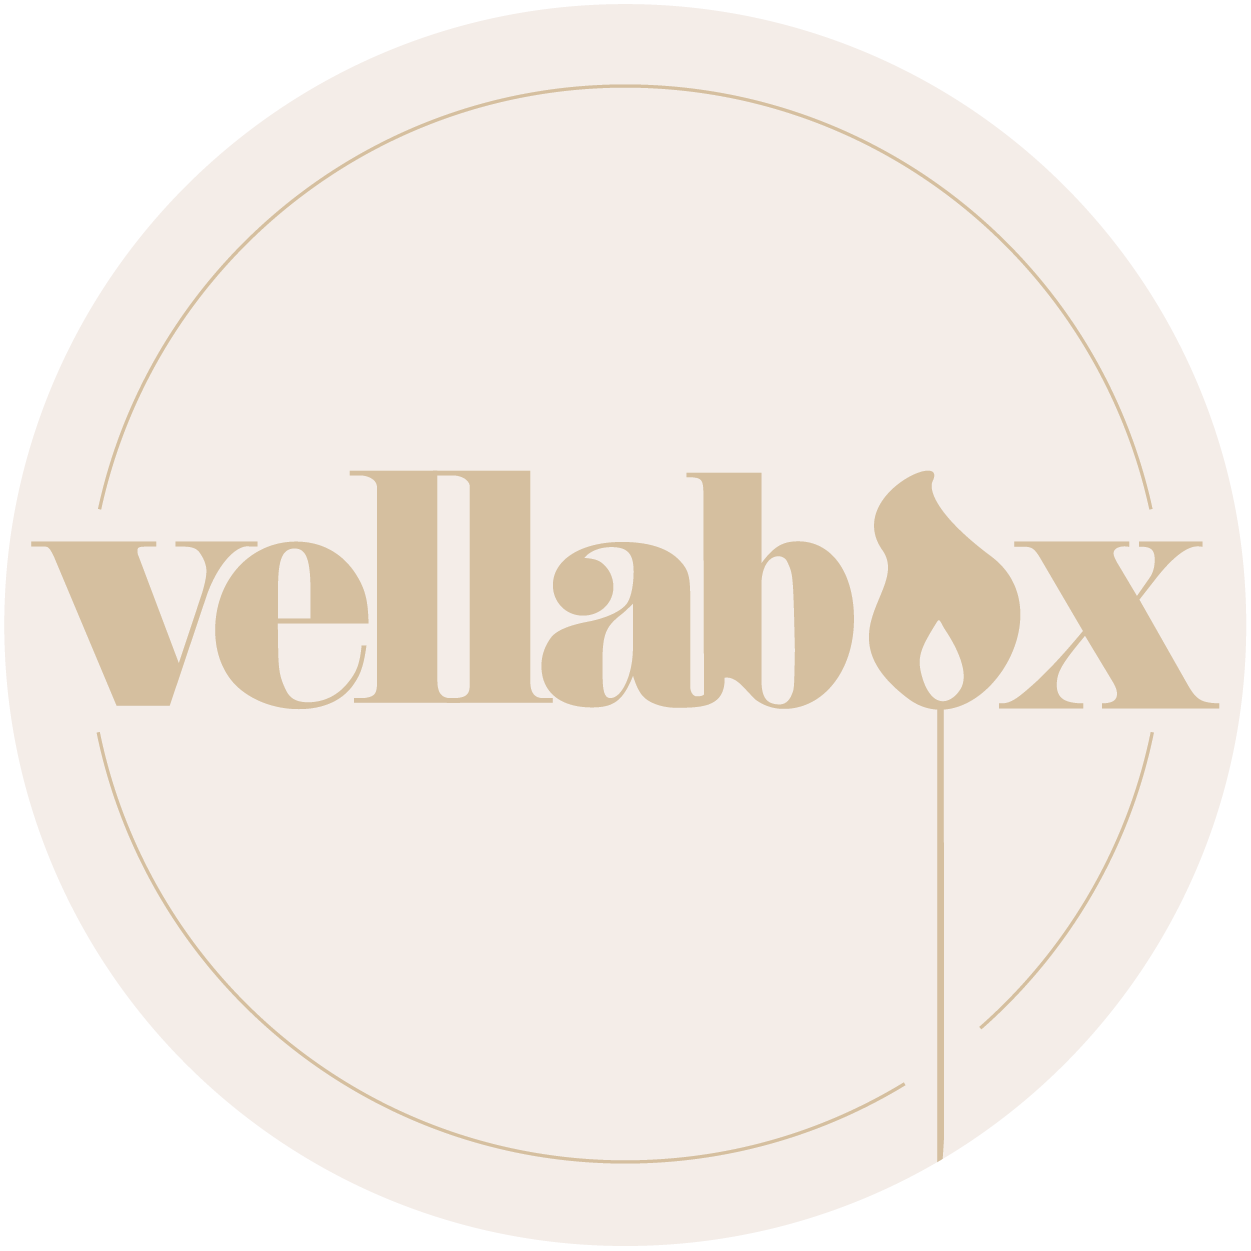 The Wine Flight - Vellabox